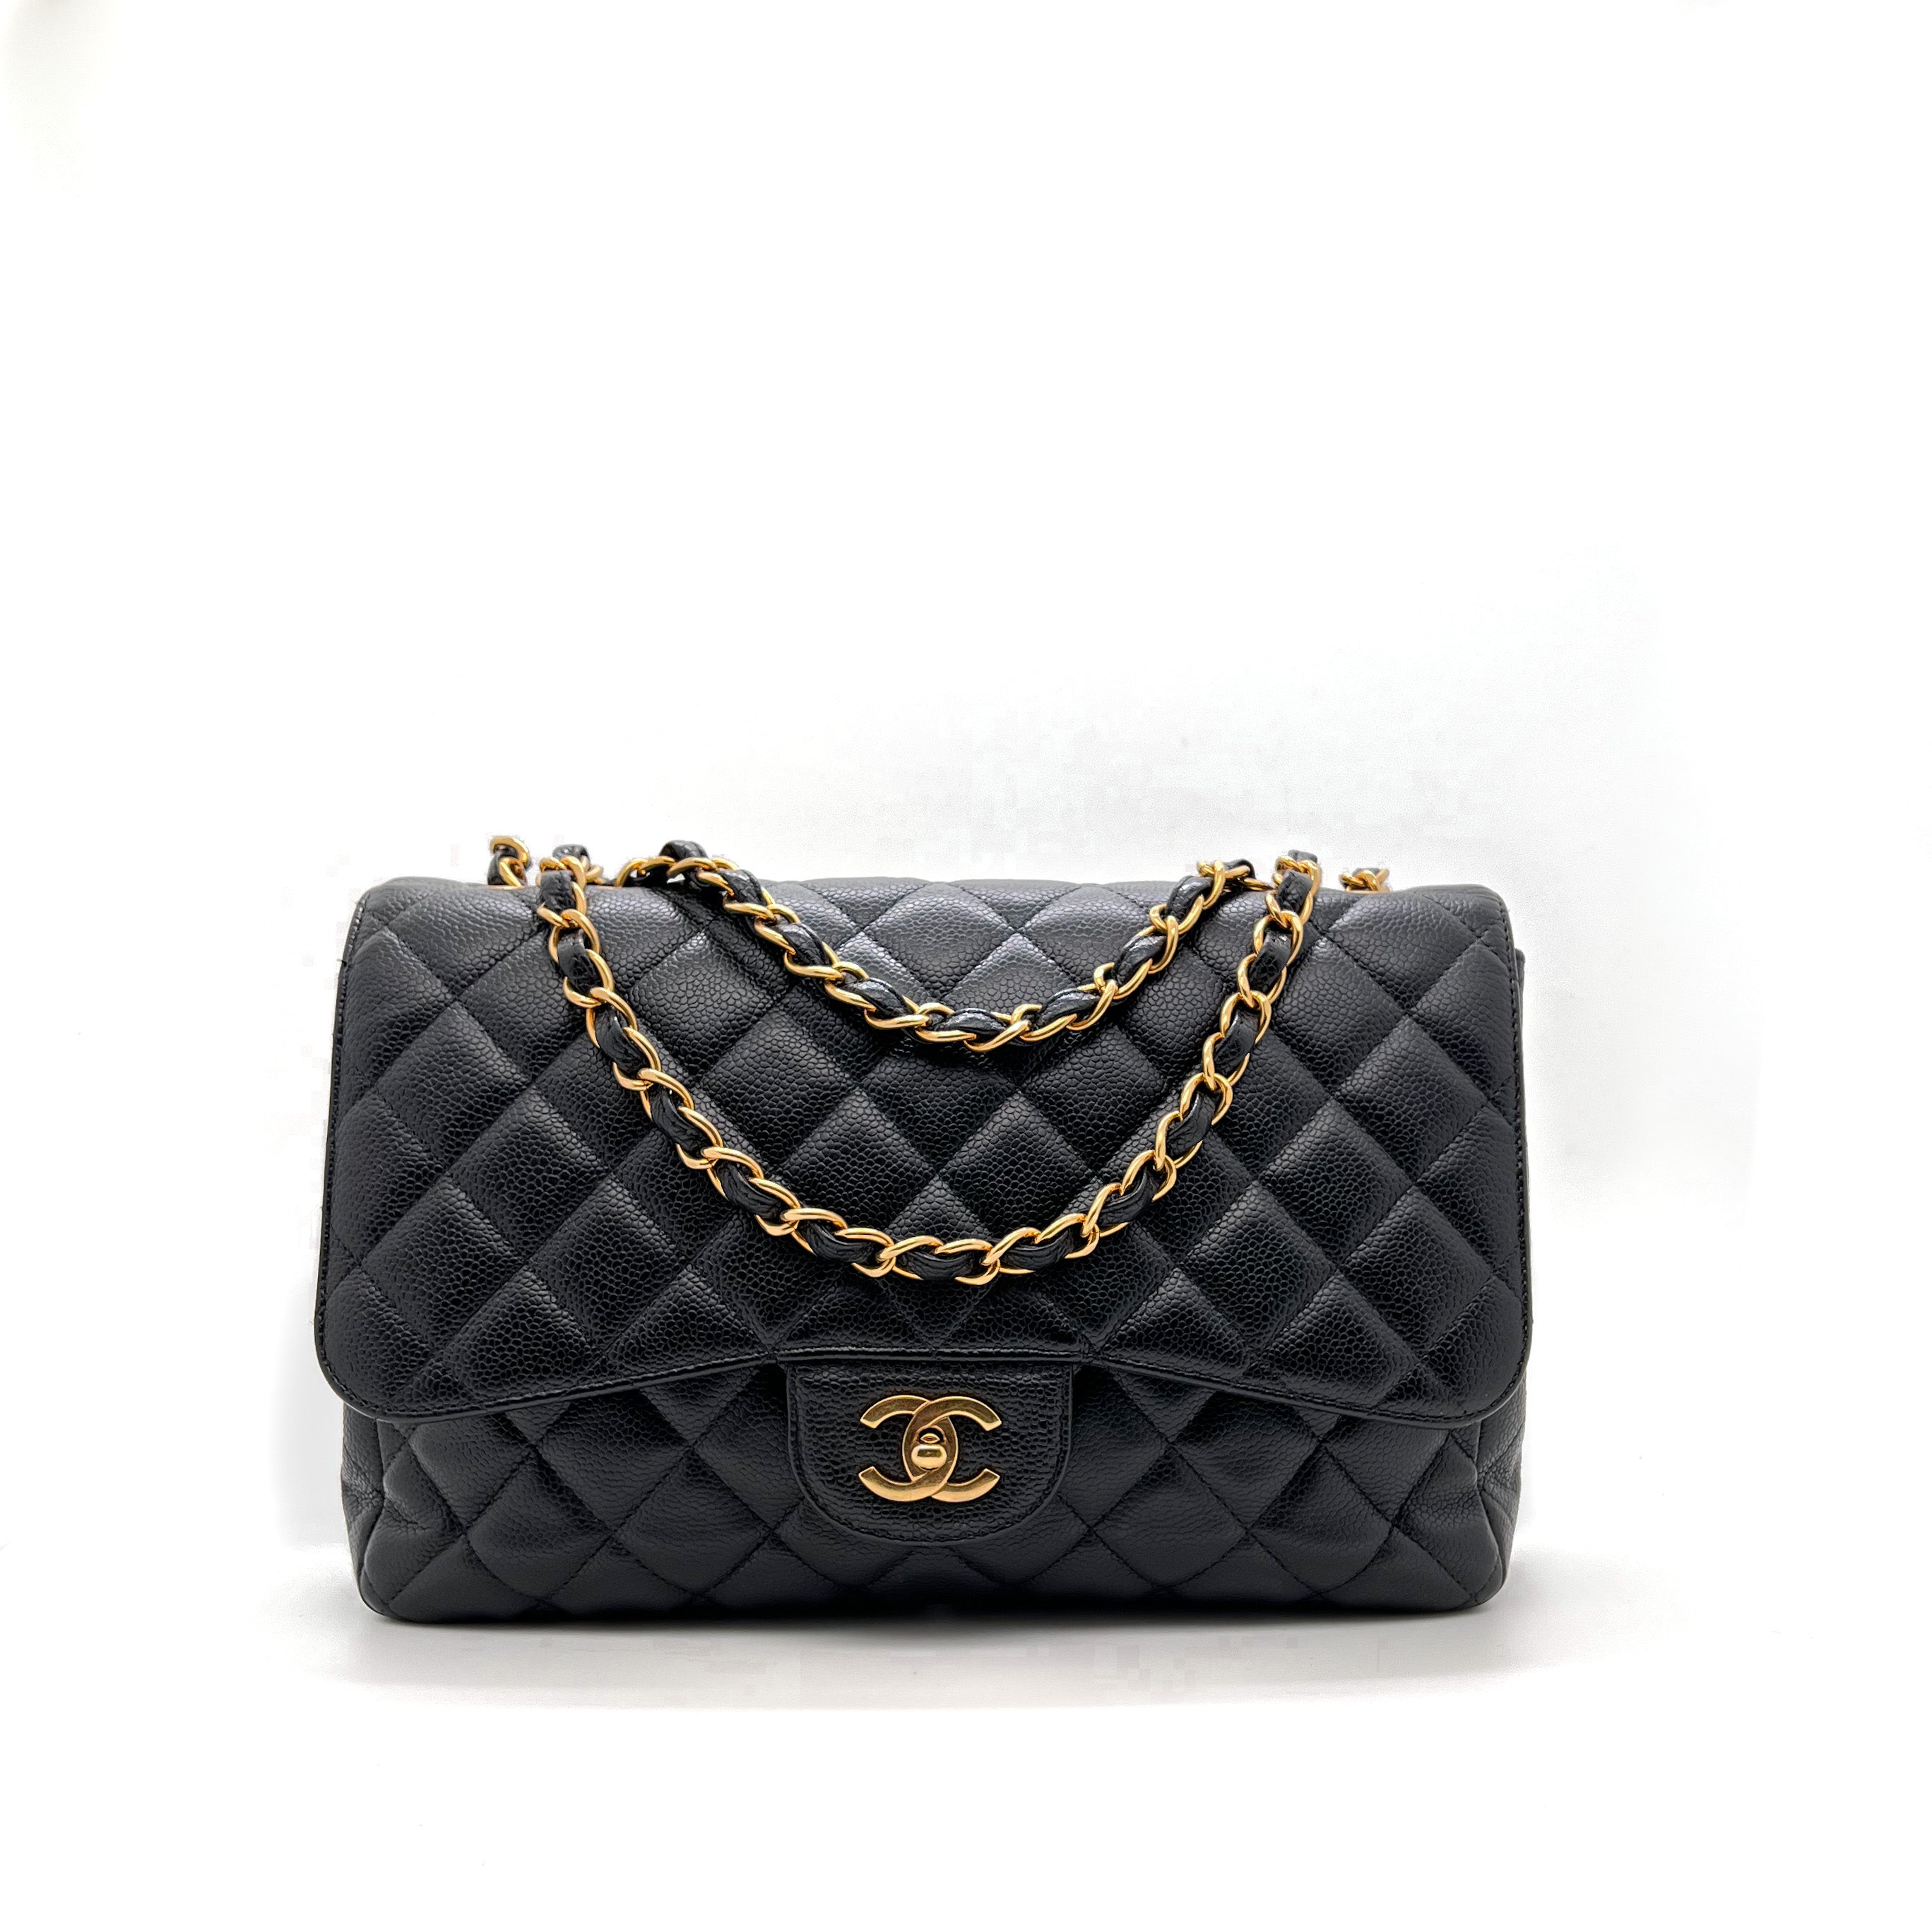 Used Chanel Handbags Online Calculator